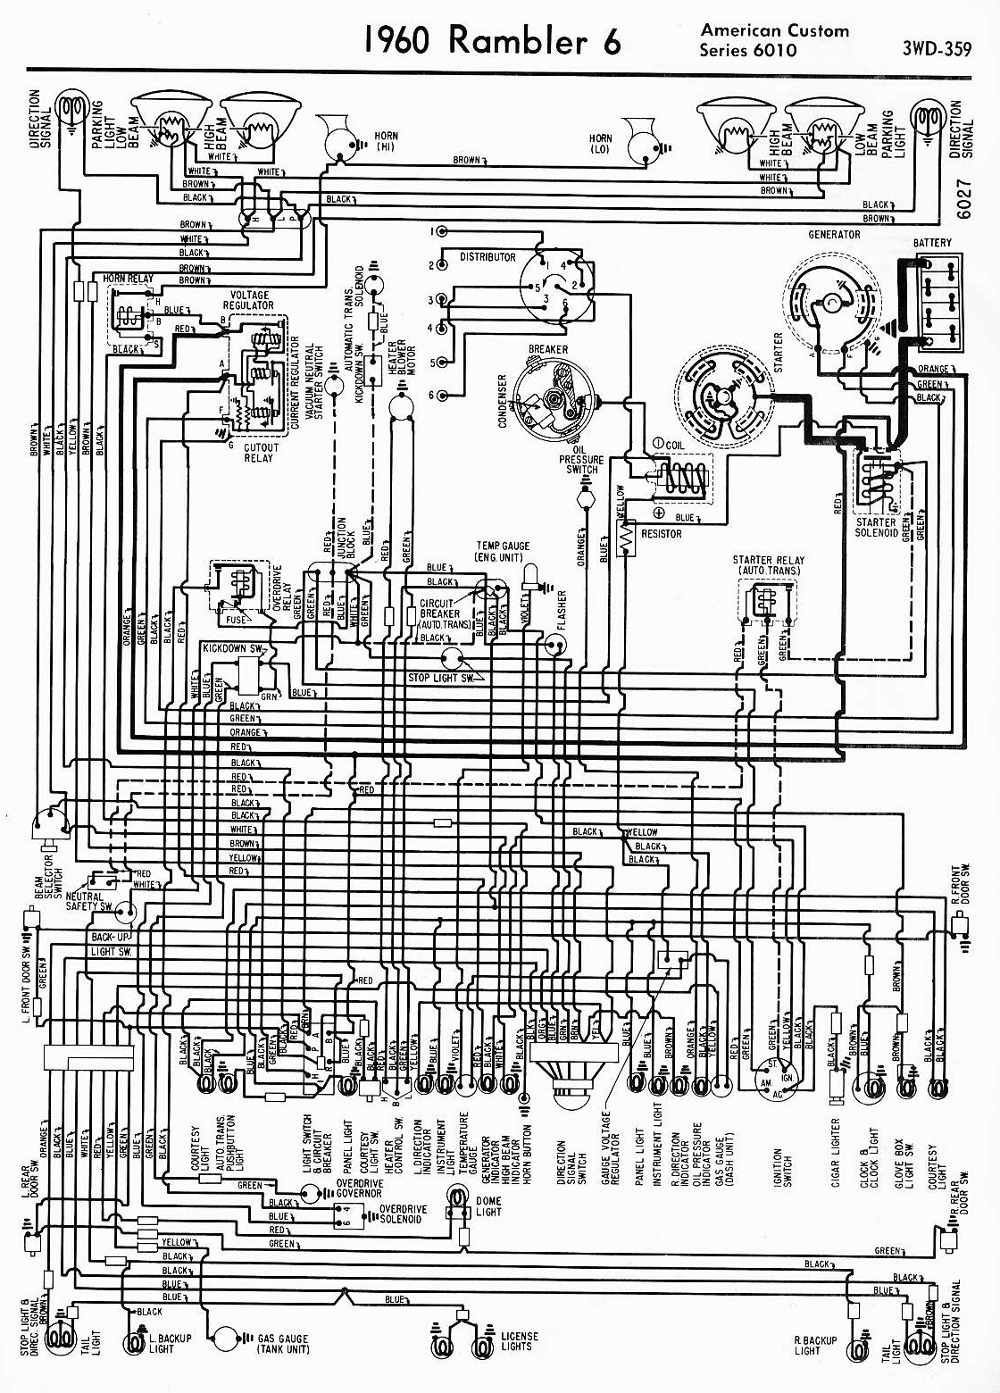 AMC - Car PDF Manual, Wiring Diagram & Fault Codes DTC